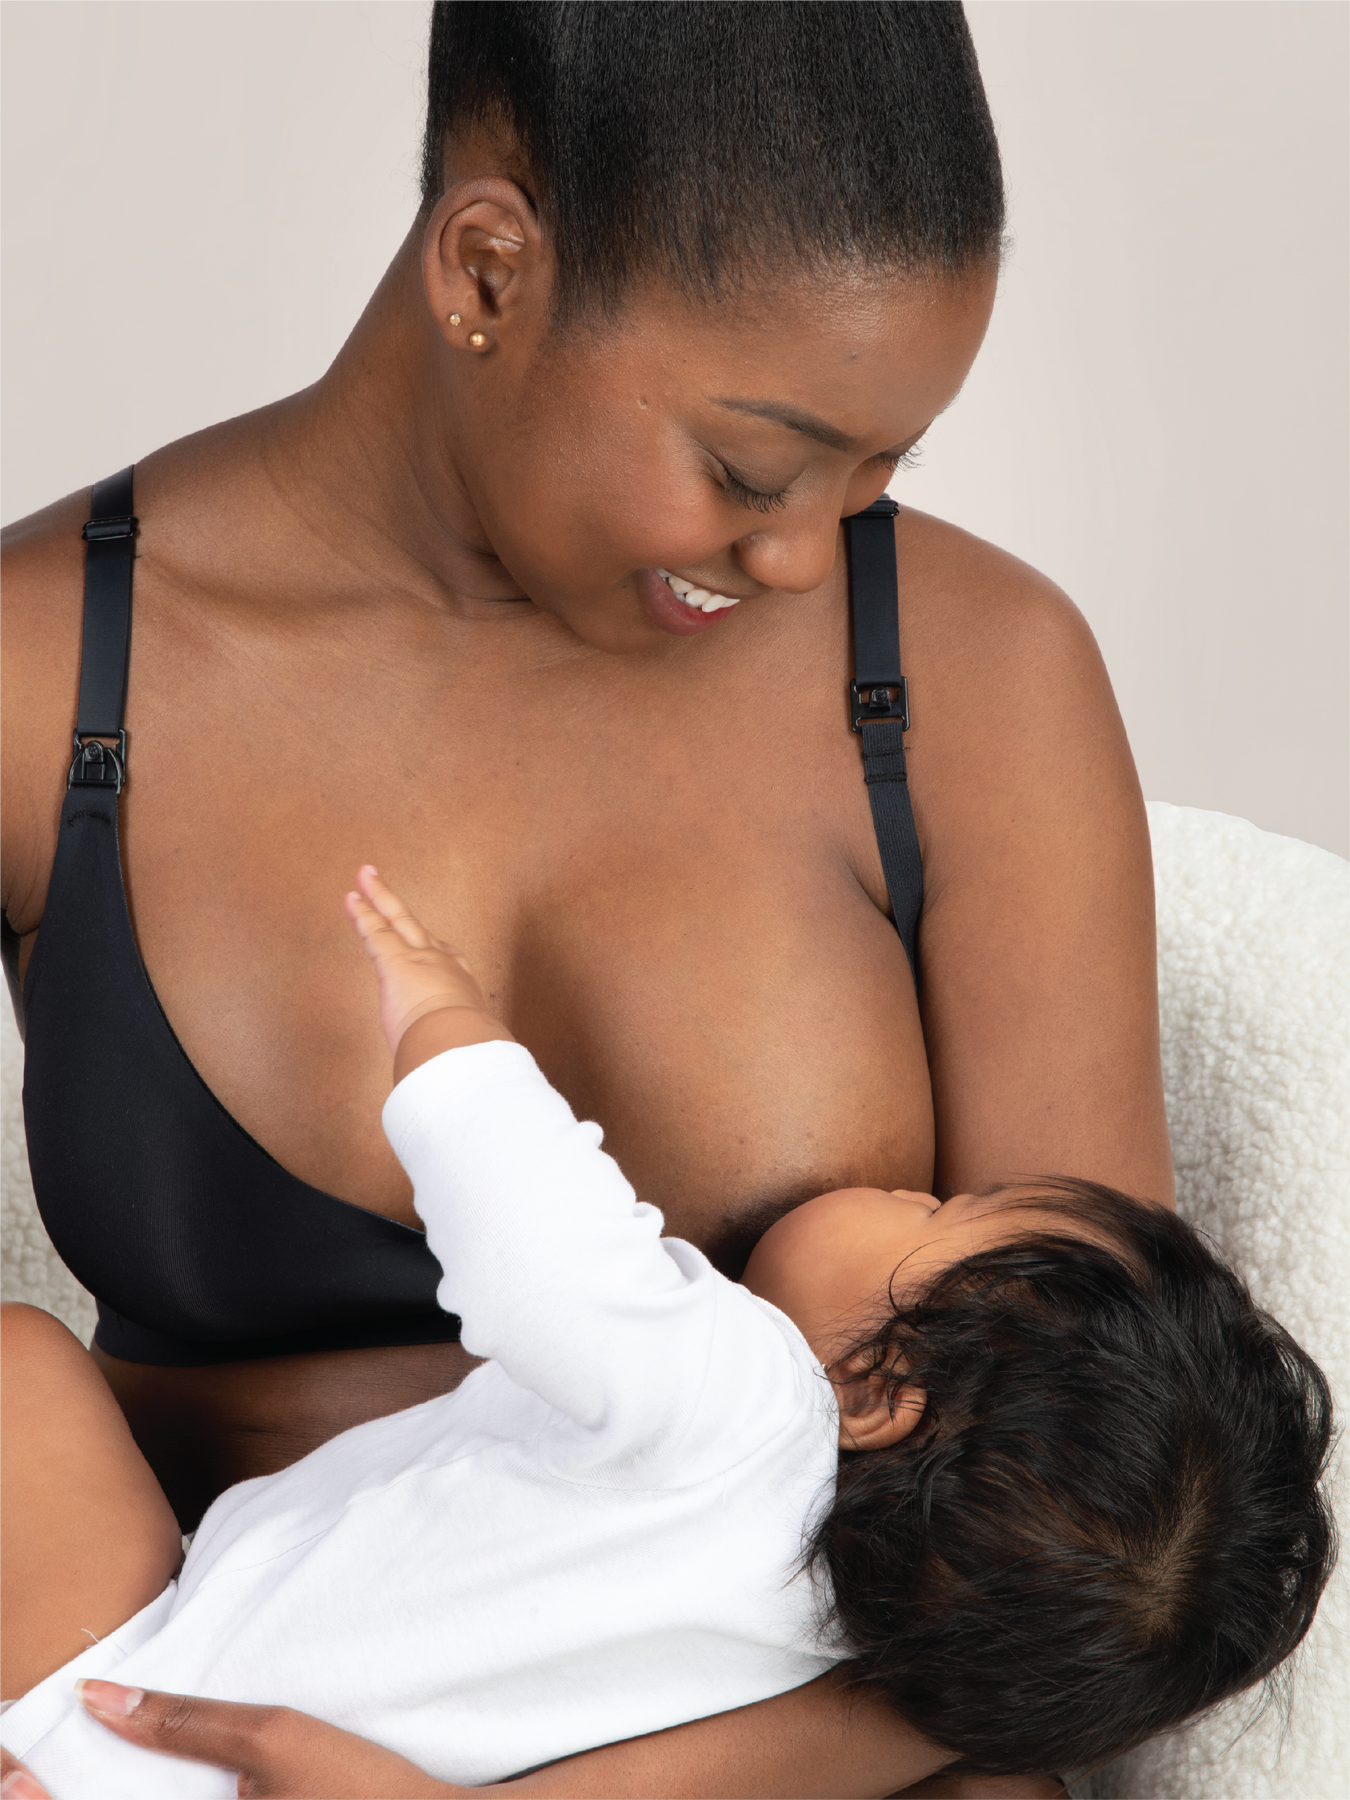 10 Sustainable Nursing Bra Brands For Eco-Conscious Breastfeeding